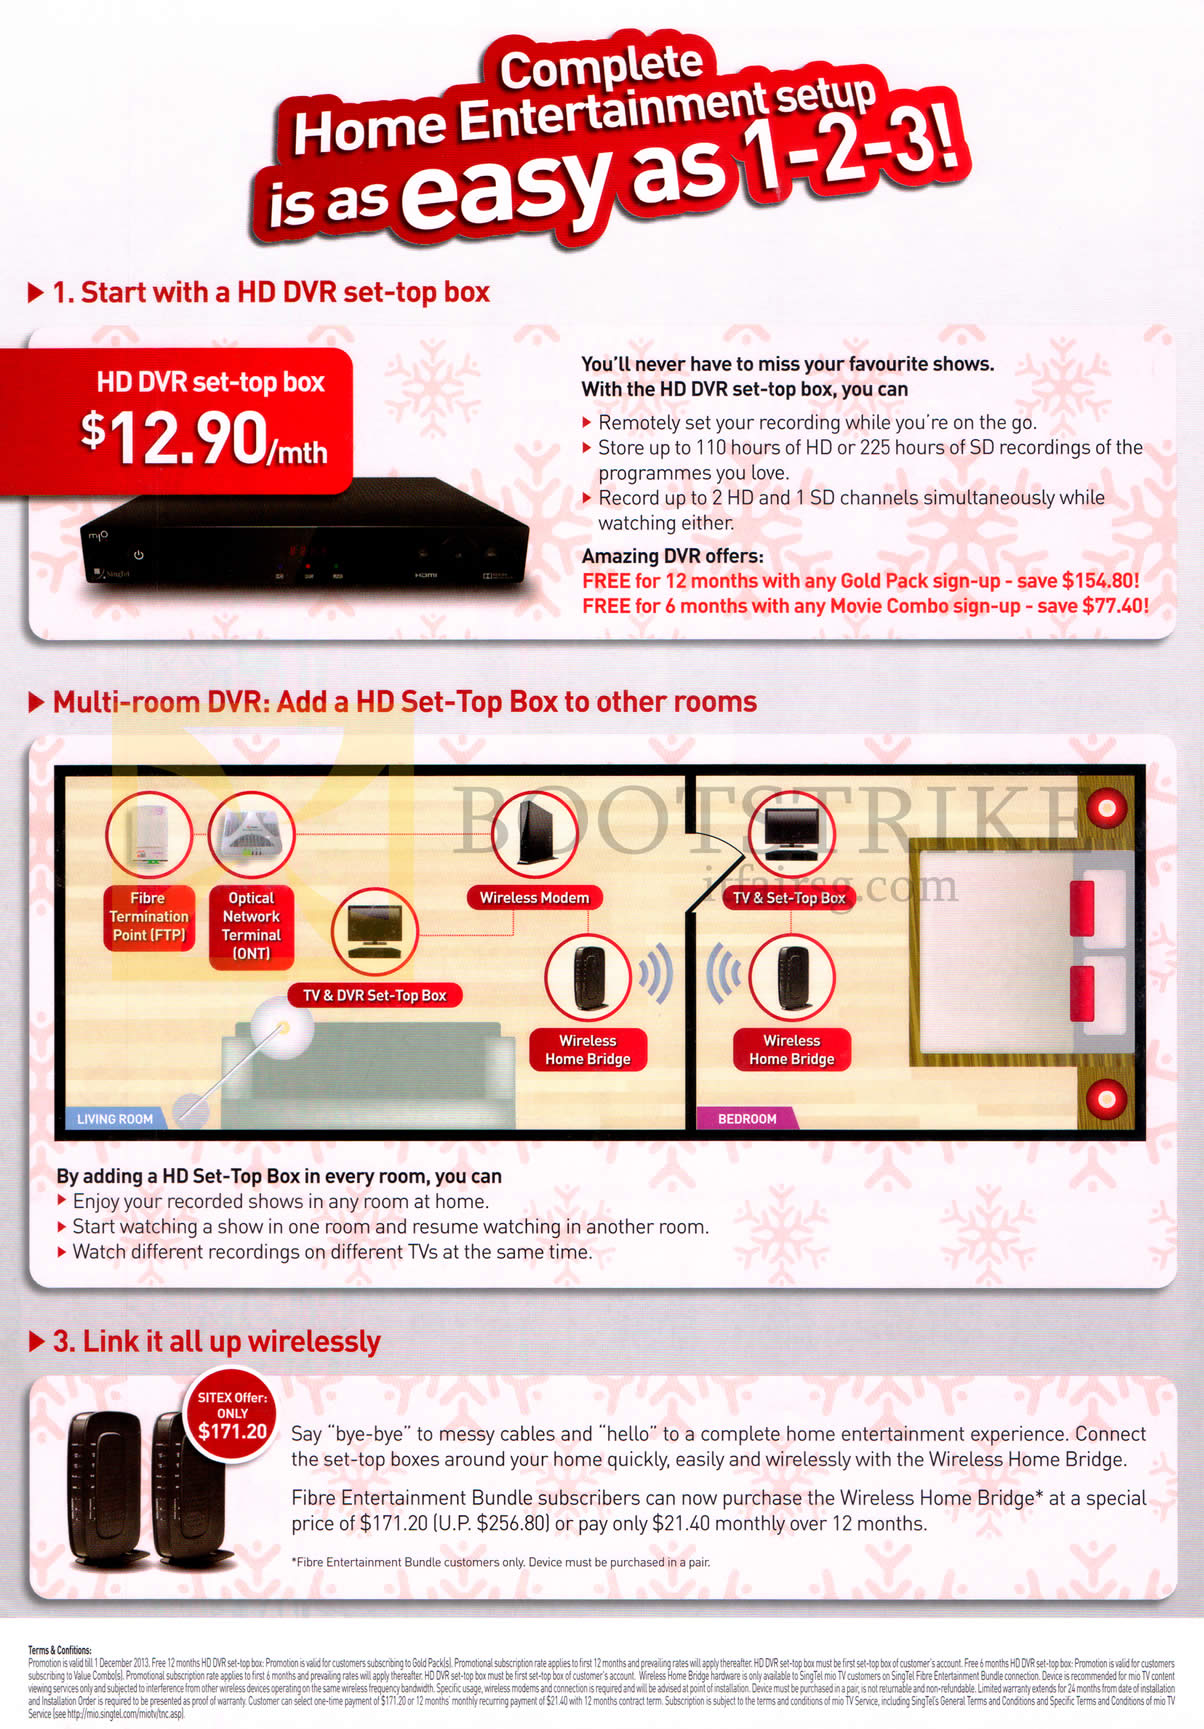 SITEX 2013 price list image brochure of Singtel Mio TV, Complete Home Entertainment Setup In 3 Steps, DVR Set-Top Box